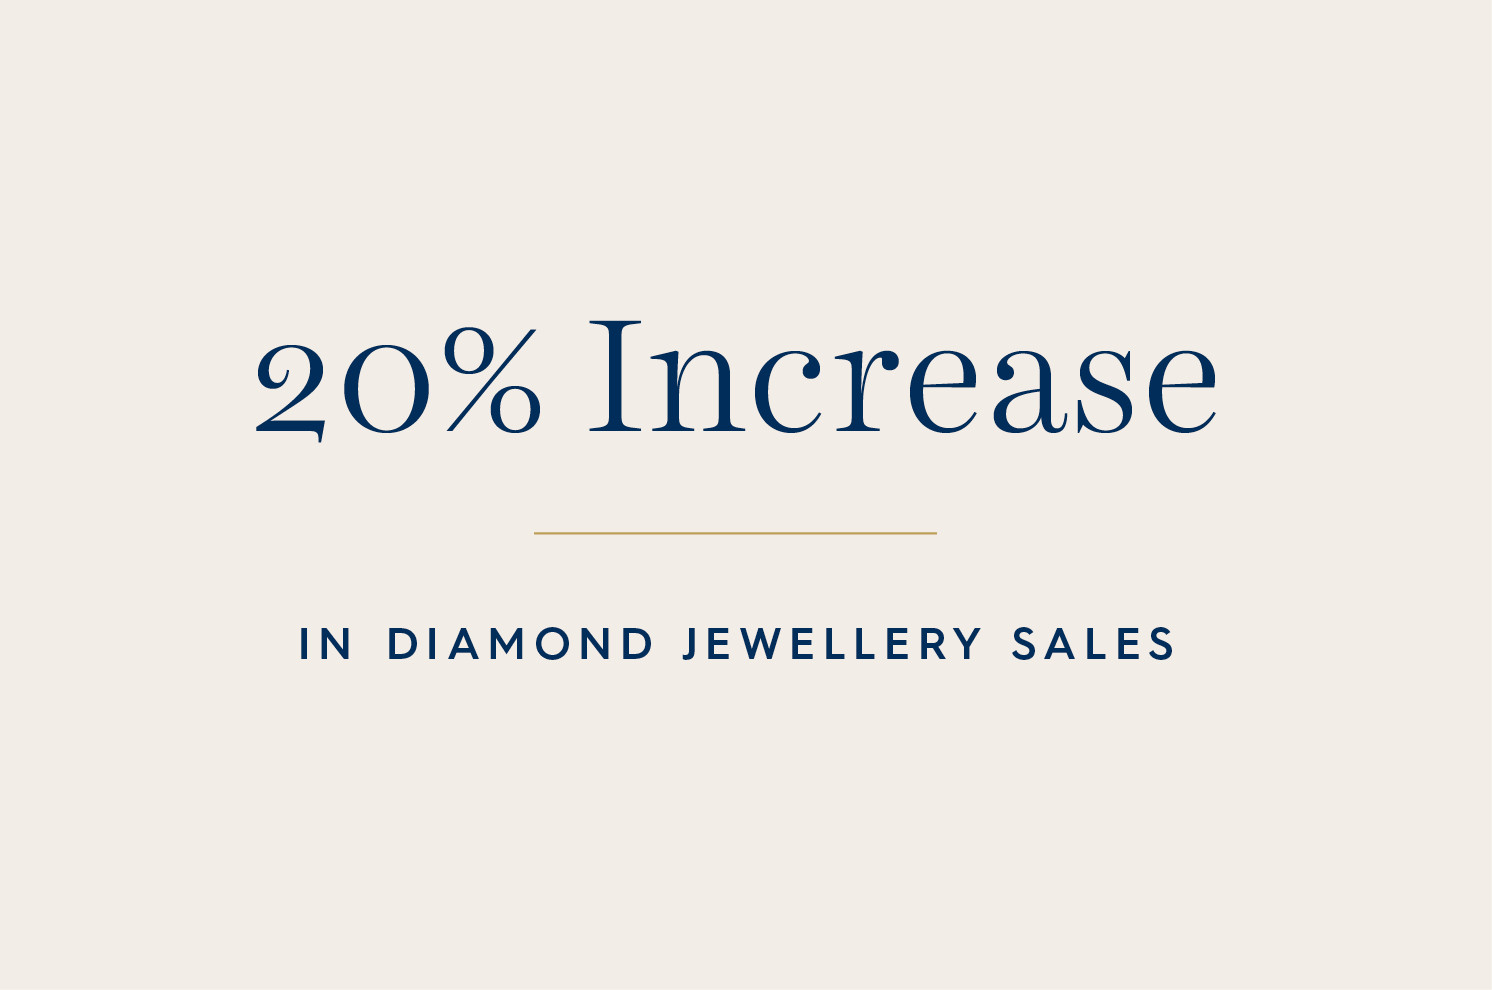 20% increase in diamond jewellery sales